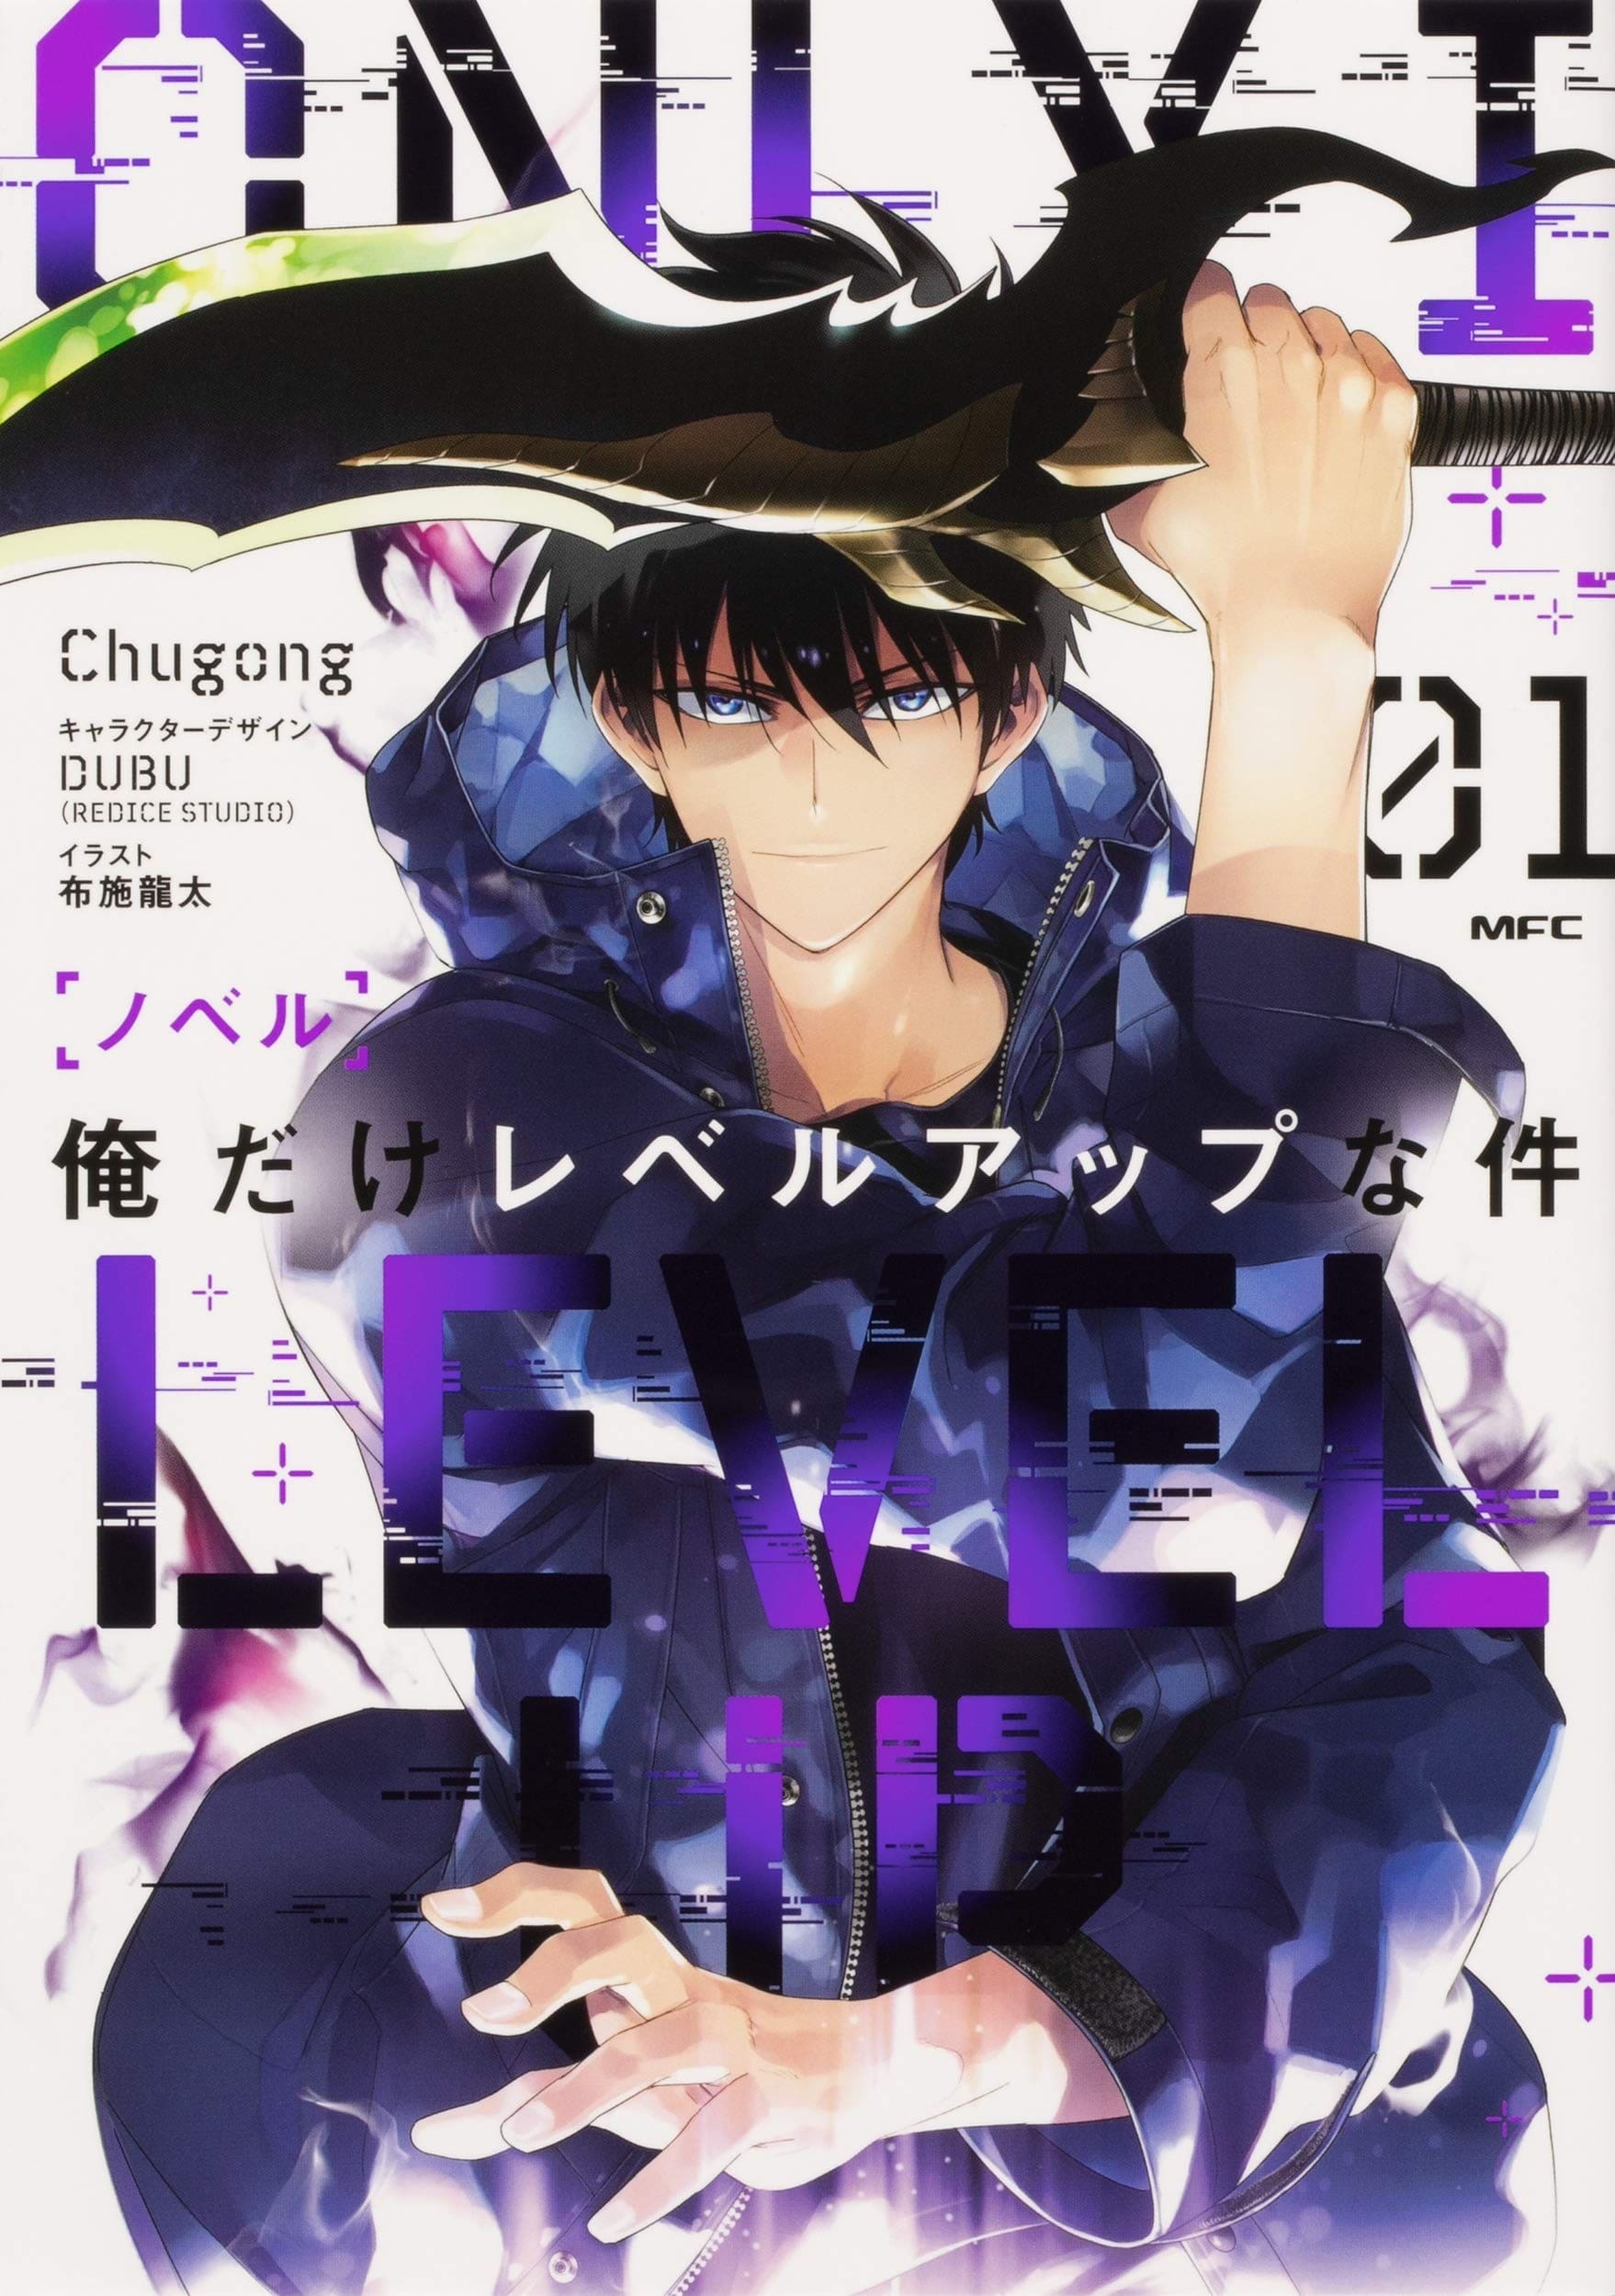 Cover for Solo Leveling Japanese Light Novel Is Released